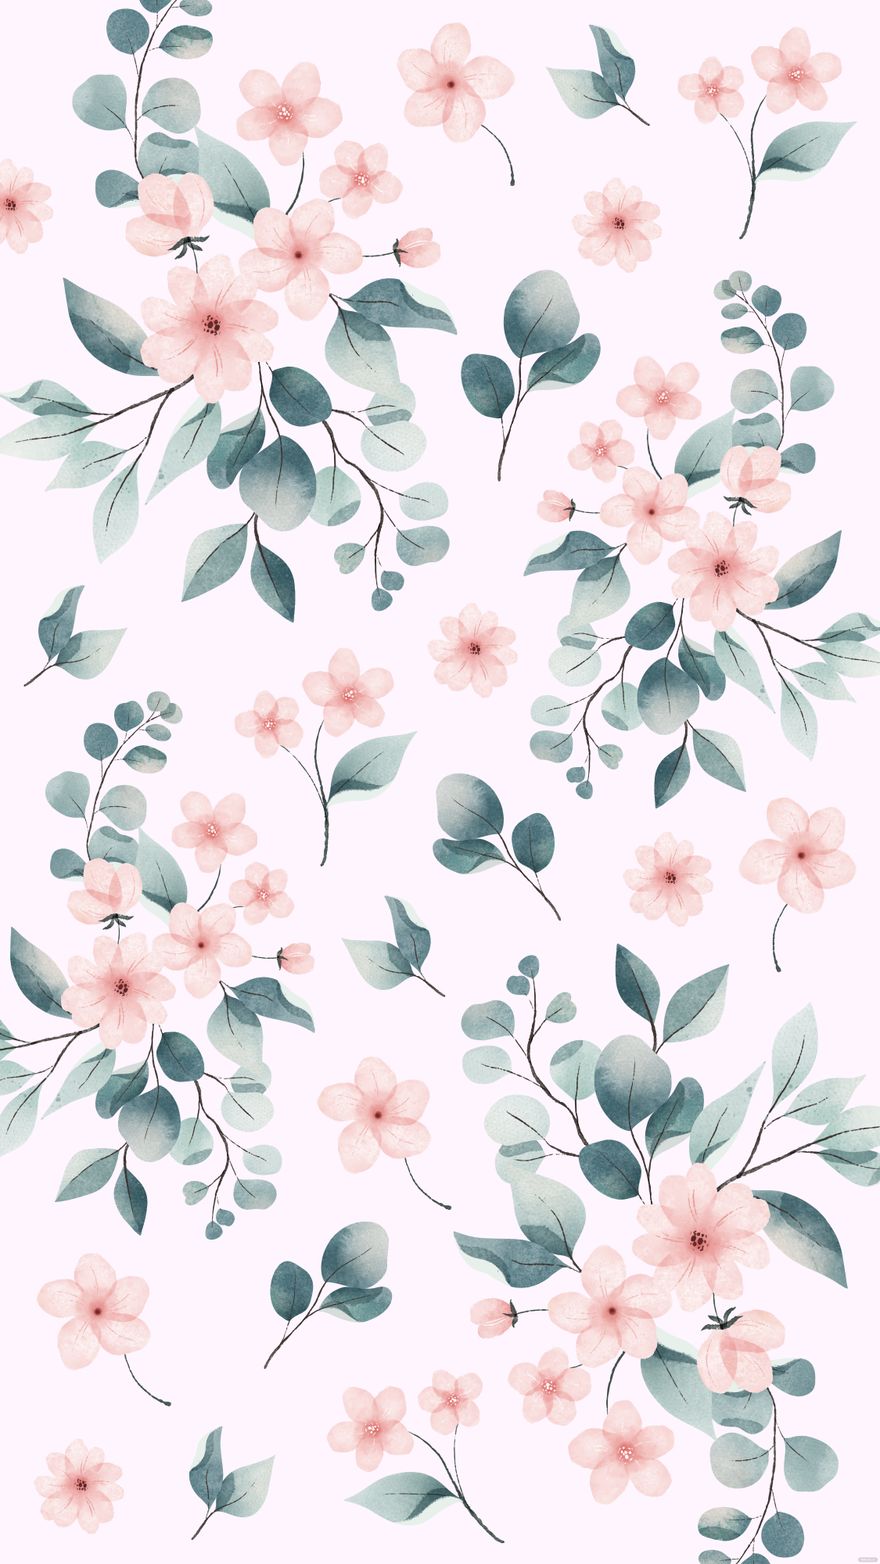 Watercolor iPhone Floral Background in SVG, JPG, Illustrator, EPS